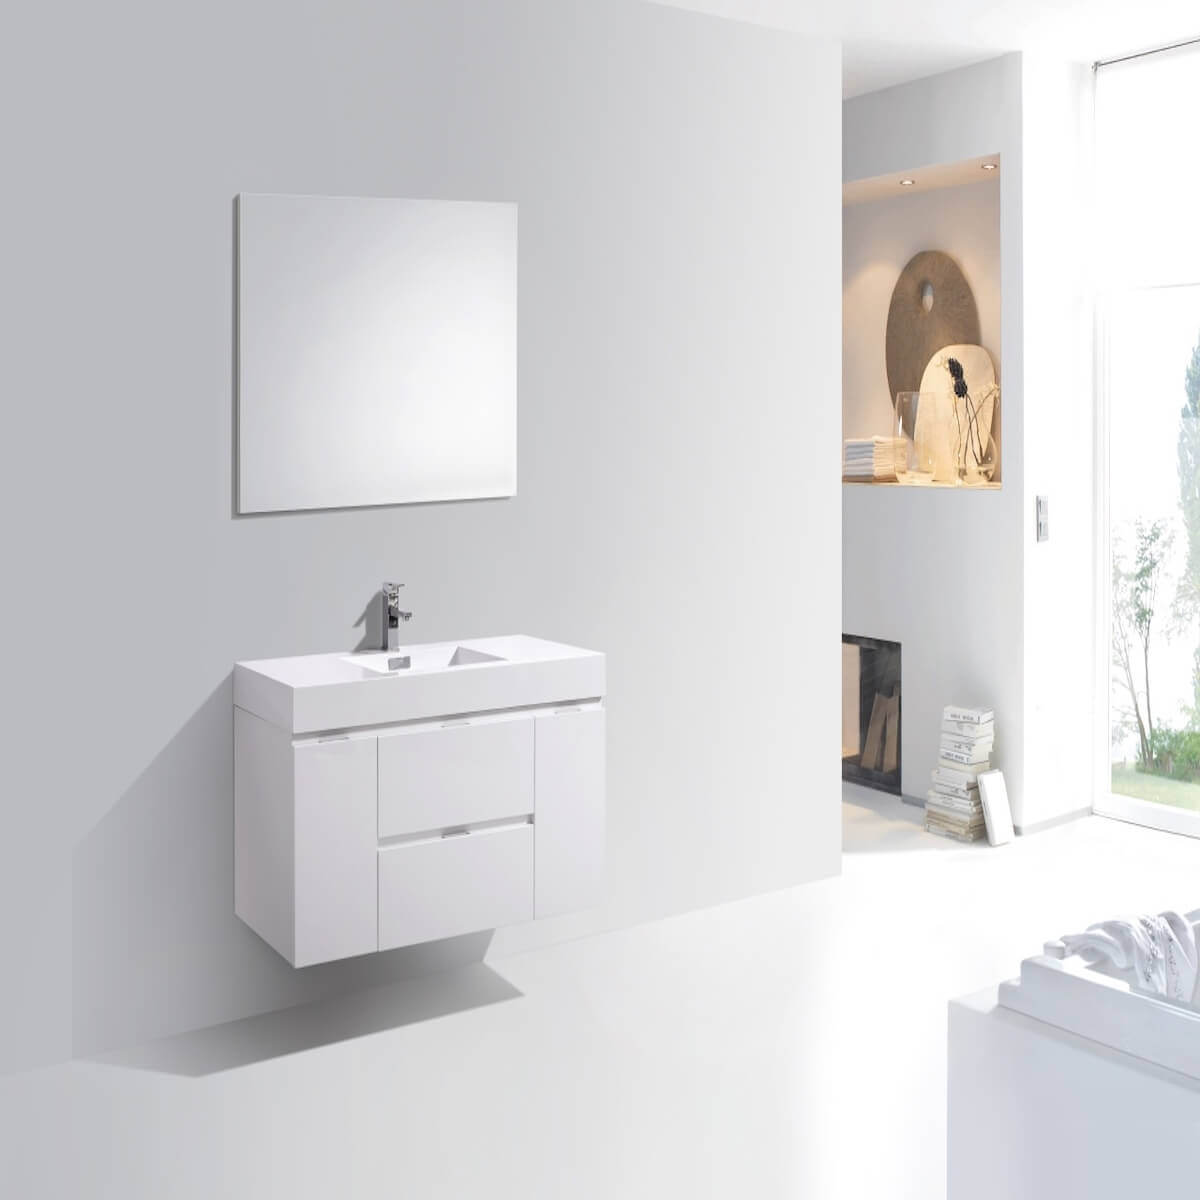 KubeBath Bliss 48" Gloss White Wall Mount Single Vanity BSL48-GW in Bathroom #finish_gloss white